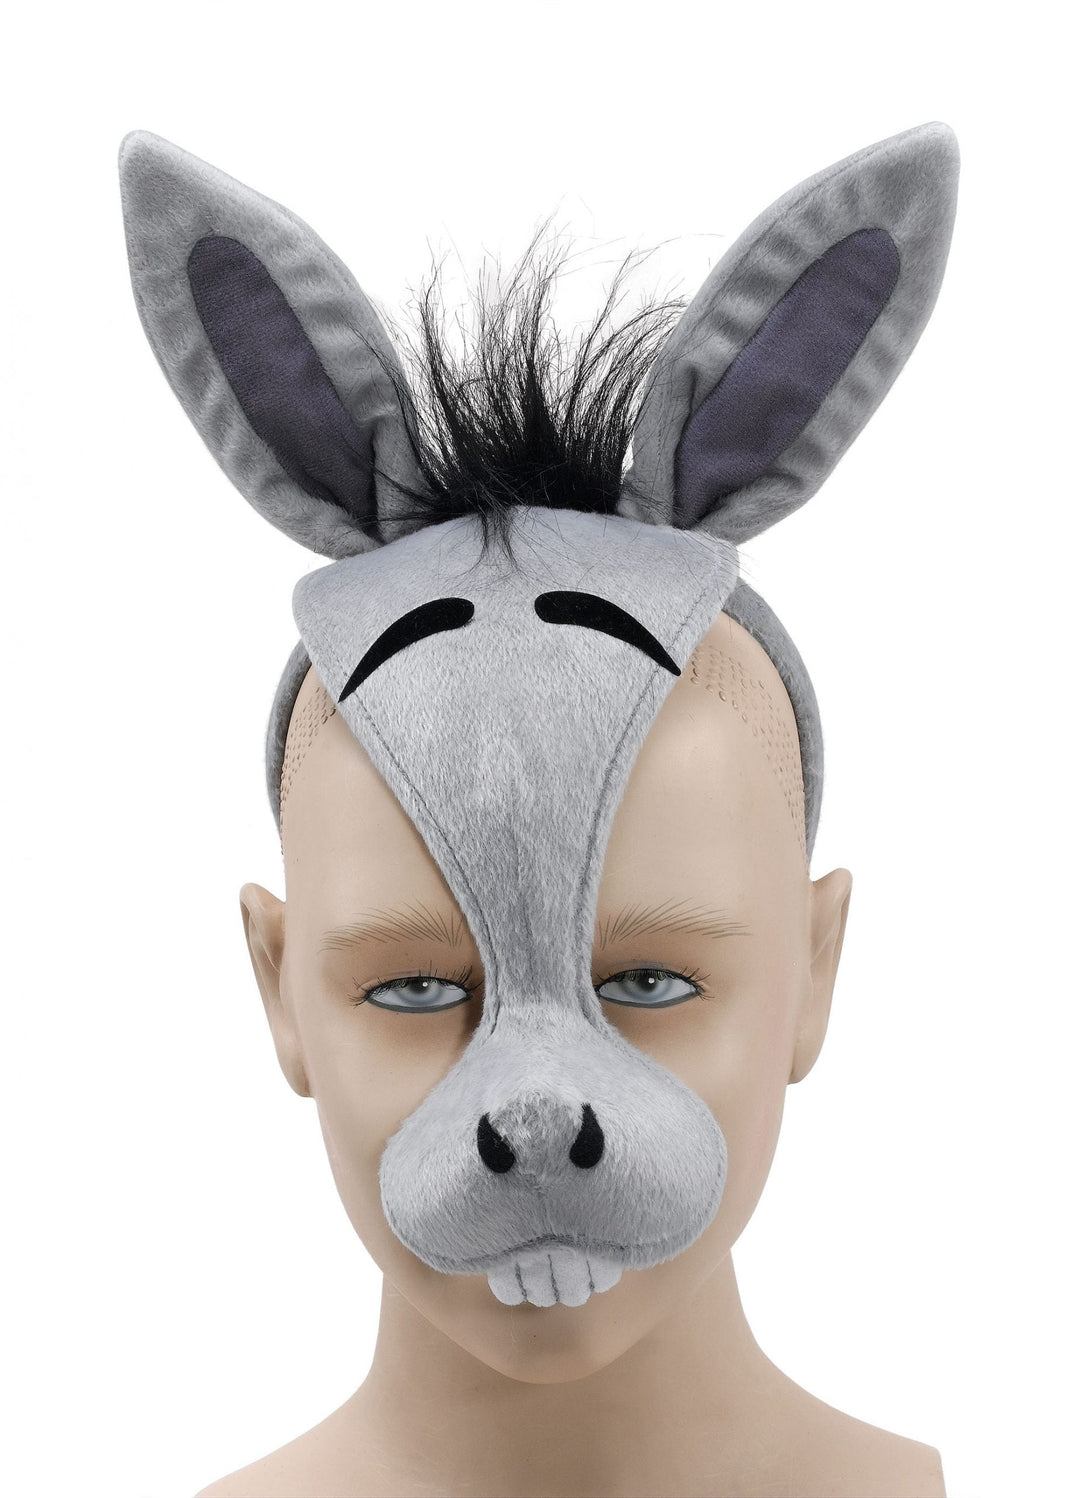 Donkey Mask With Sound_1